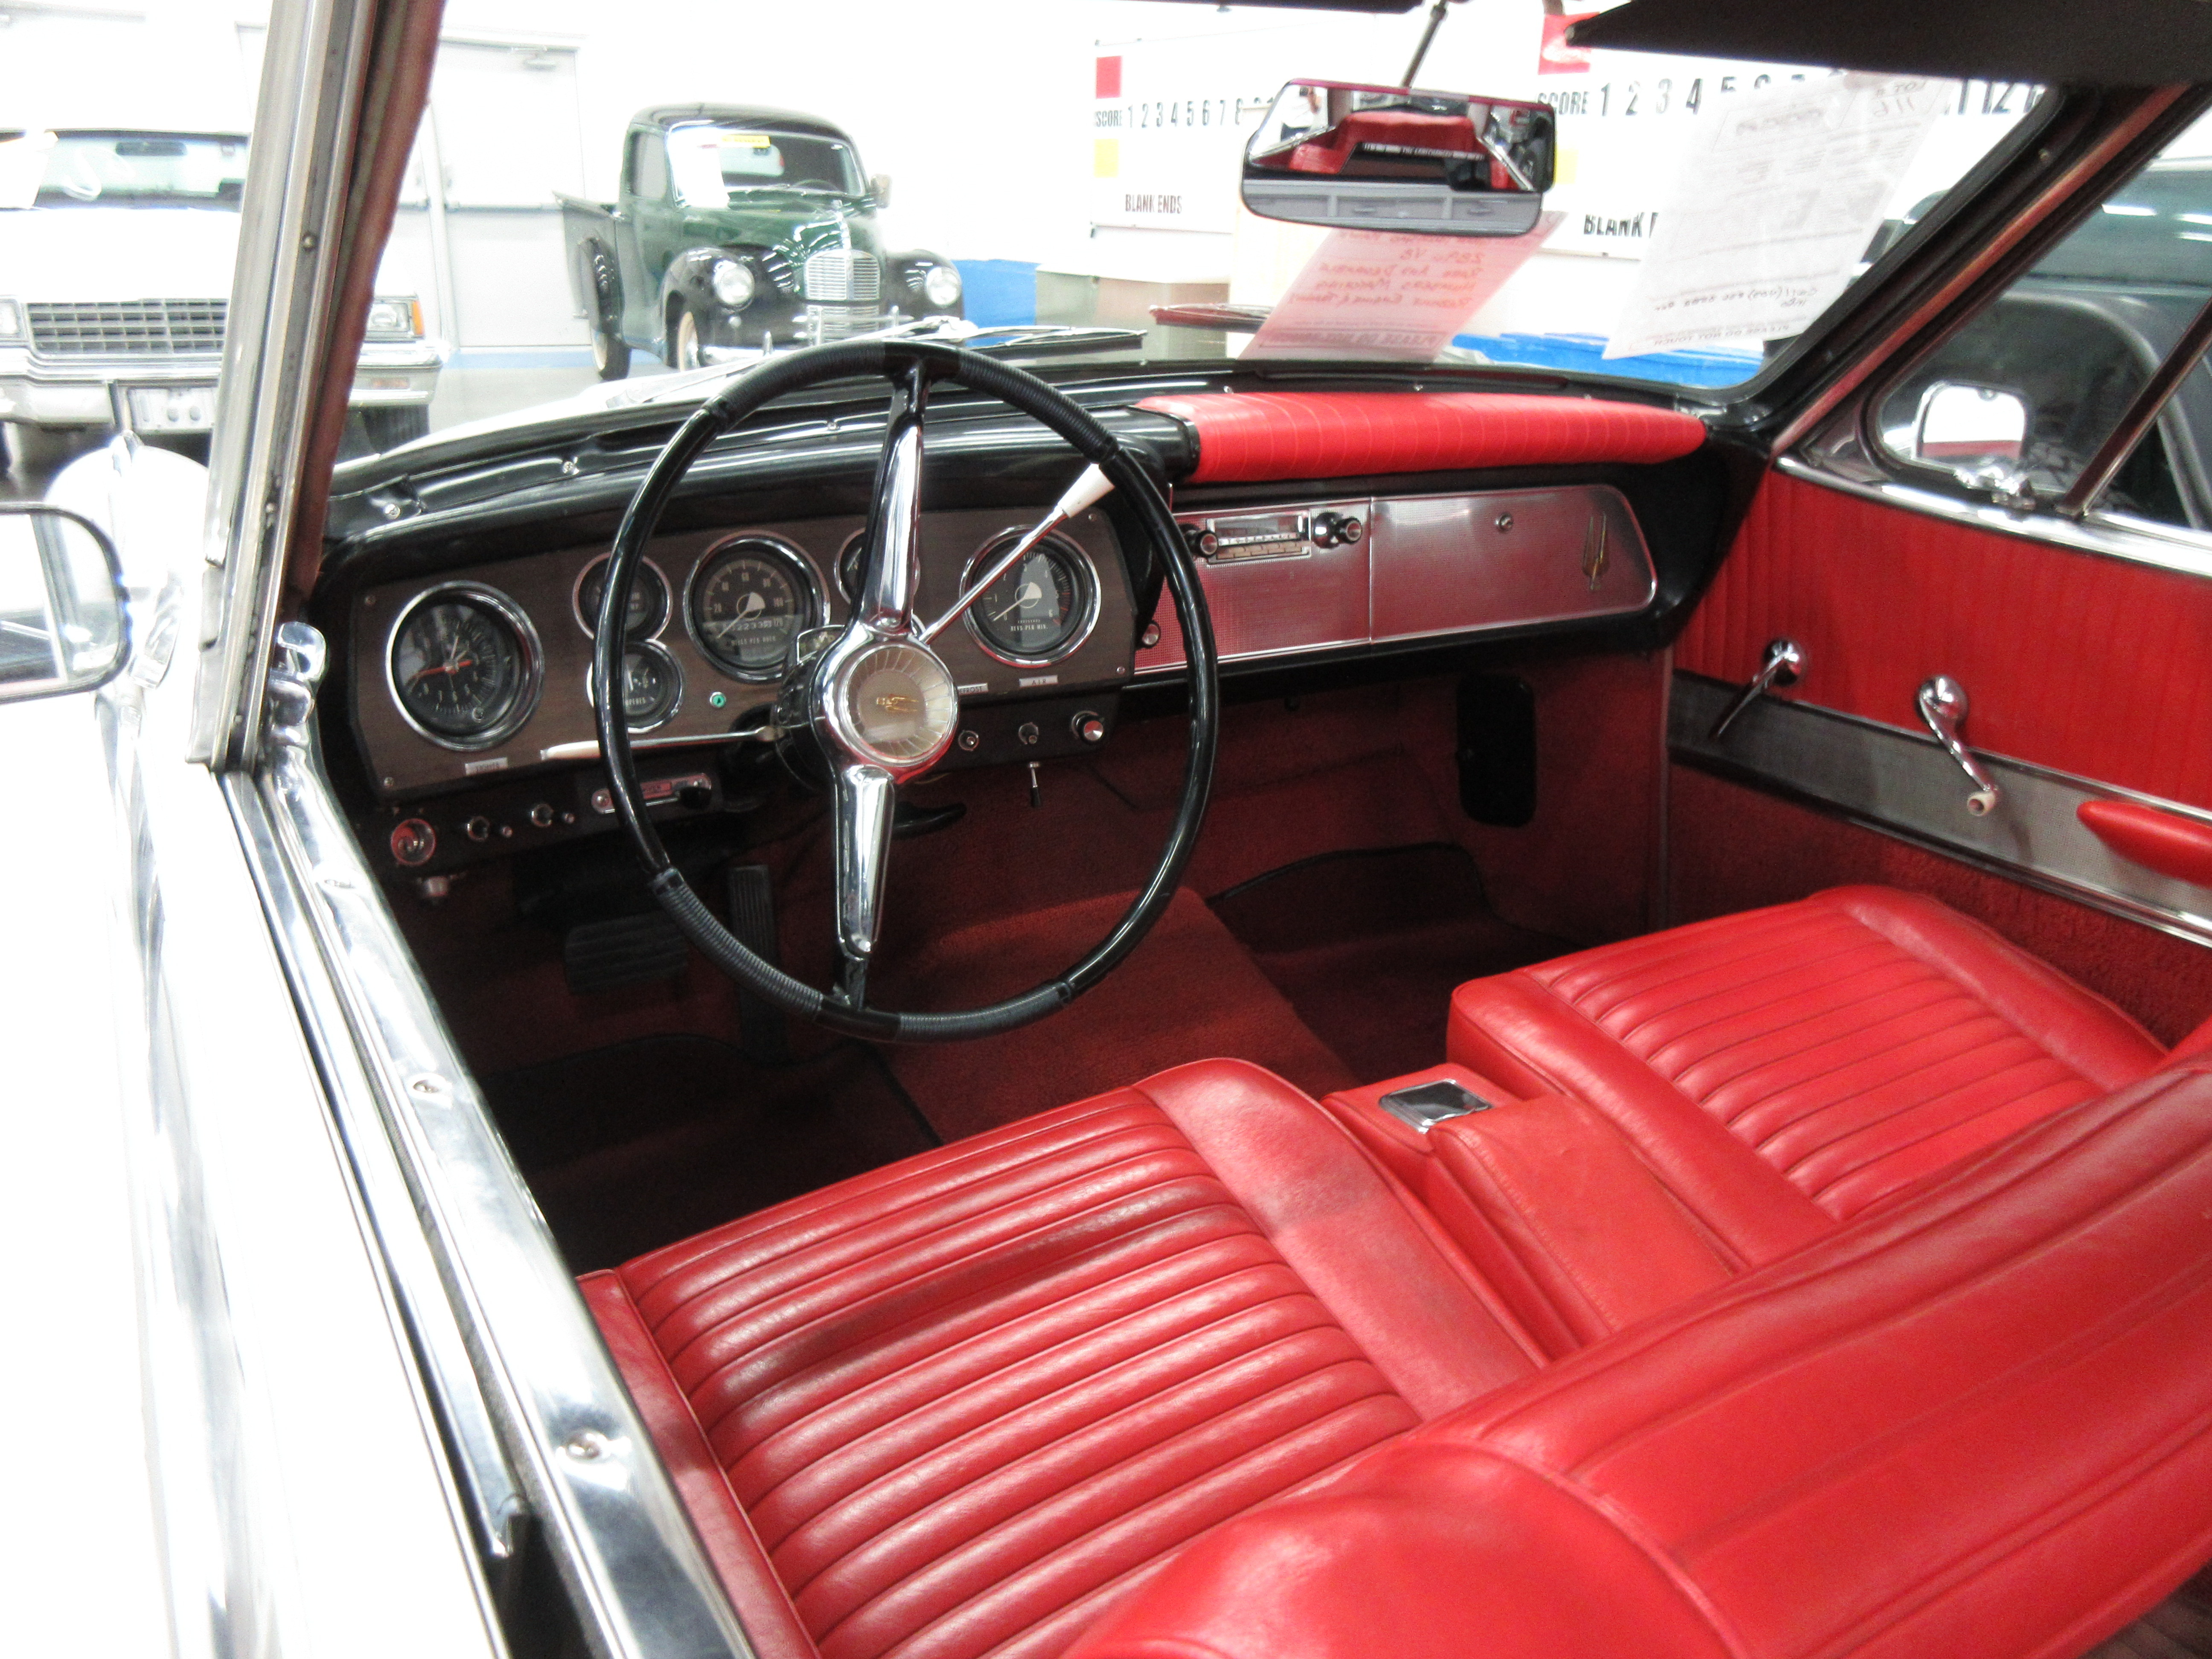 File:1962 Studebaker Hawk Gran Turismo - interior - Flickr - dave 7.jpg - Wikimedia Commons